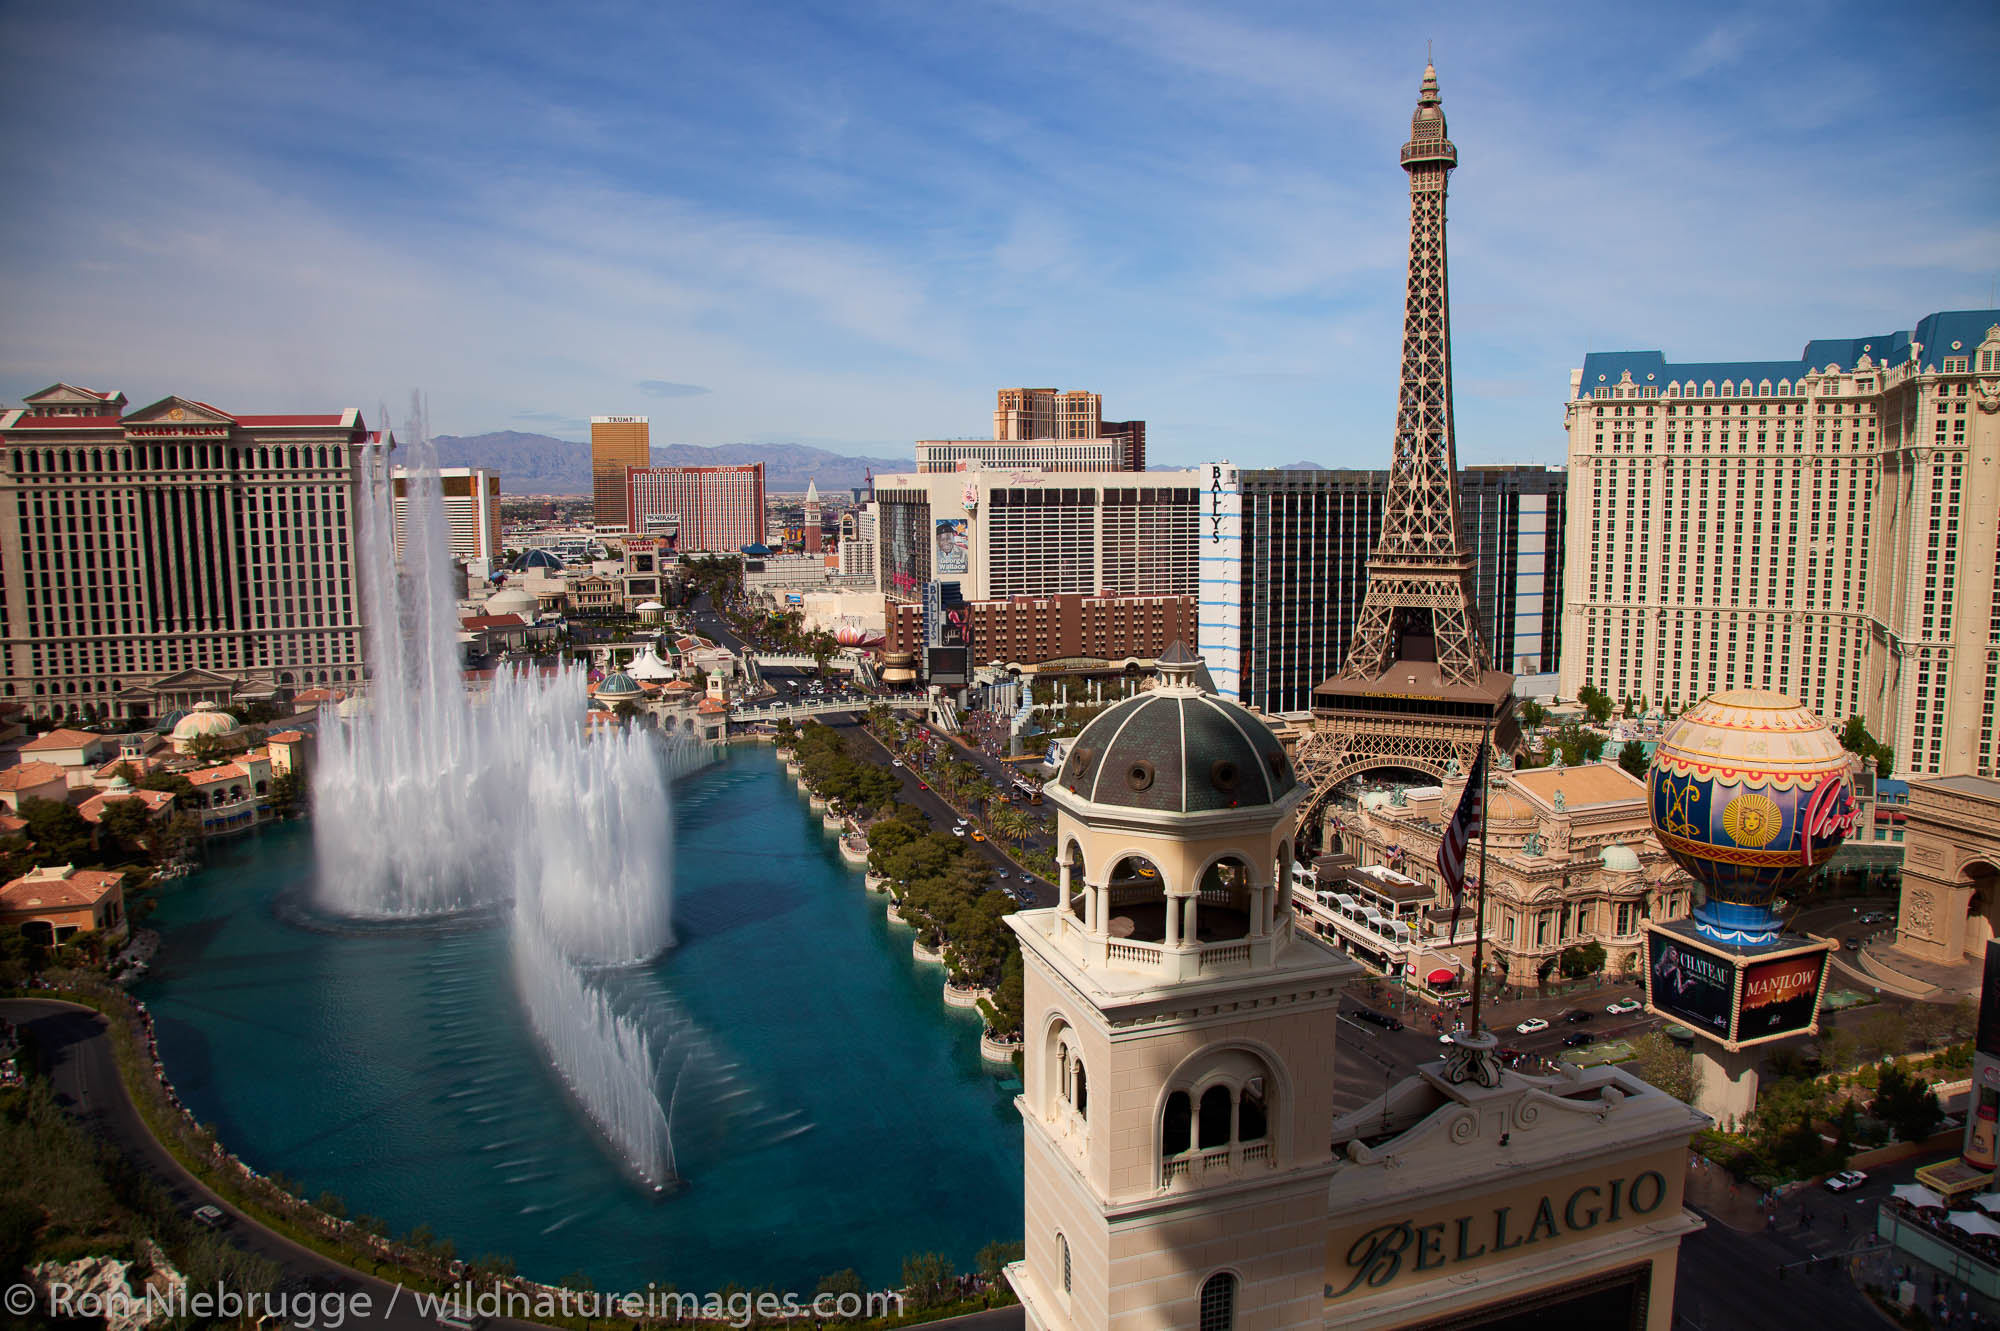 View of the Bellagio Fountain, Las Vegas, Nevada.